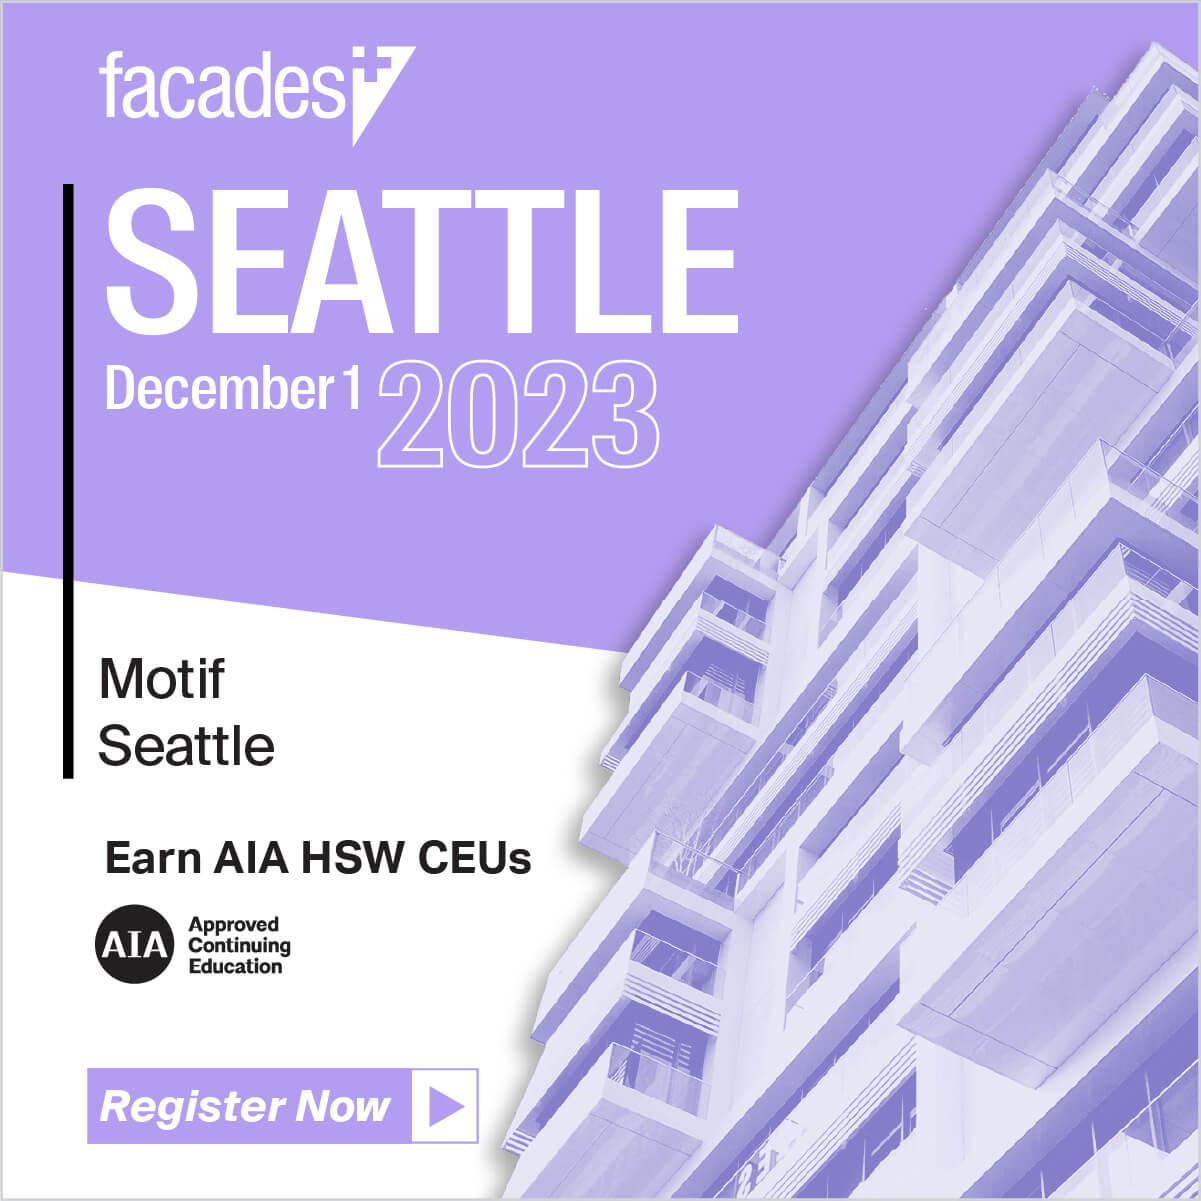 Seattle, December 1 Image Poster